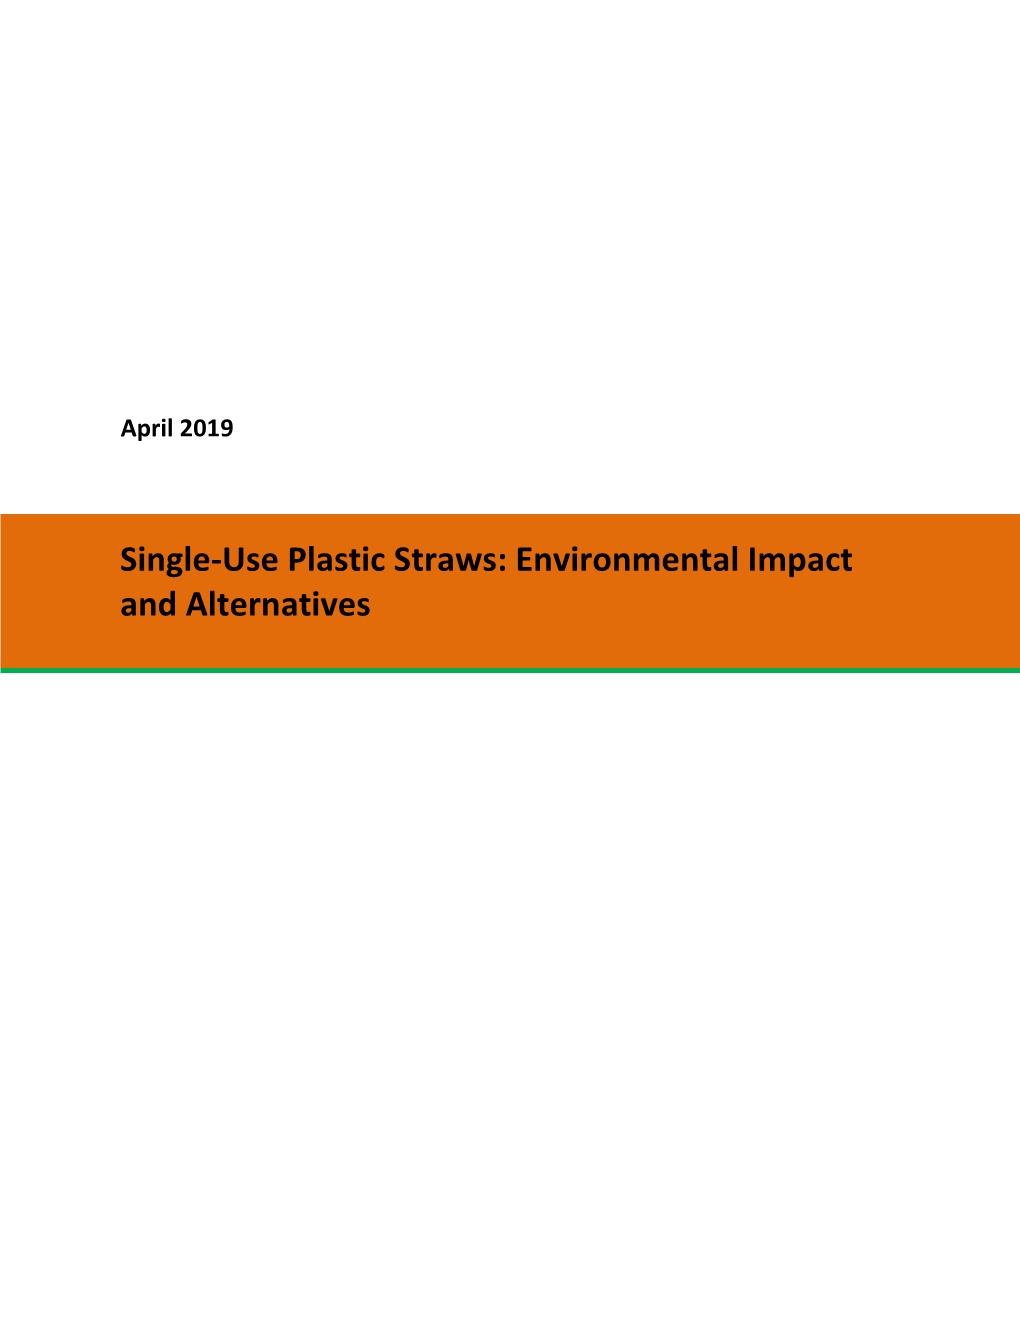 Single-Use Plastic Straws: Environmental Impact and Alternatives